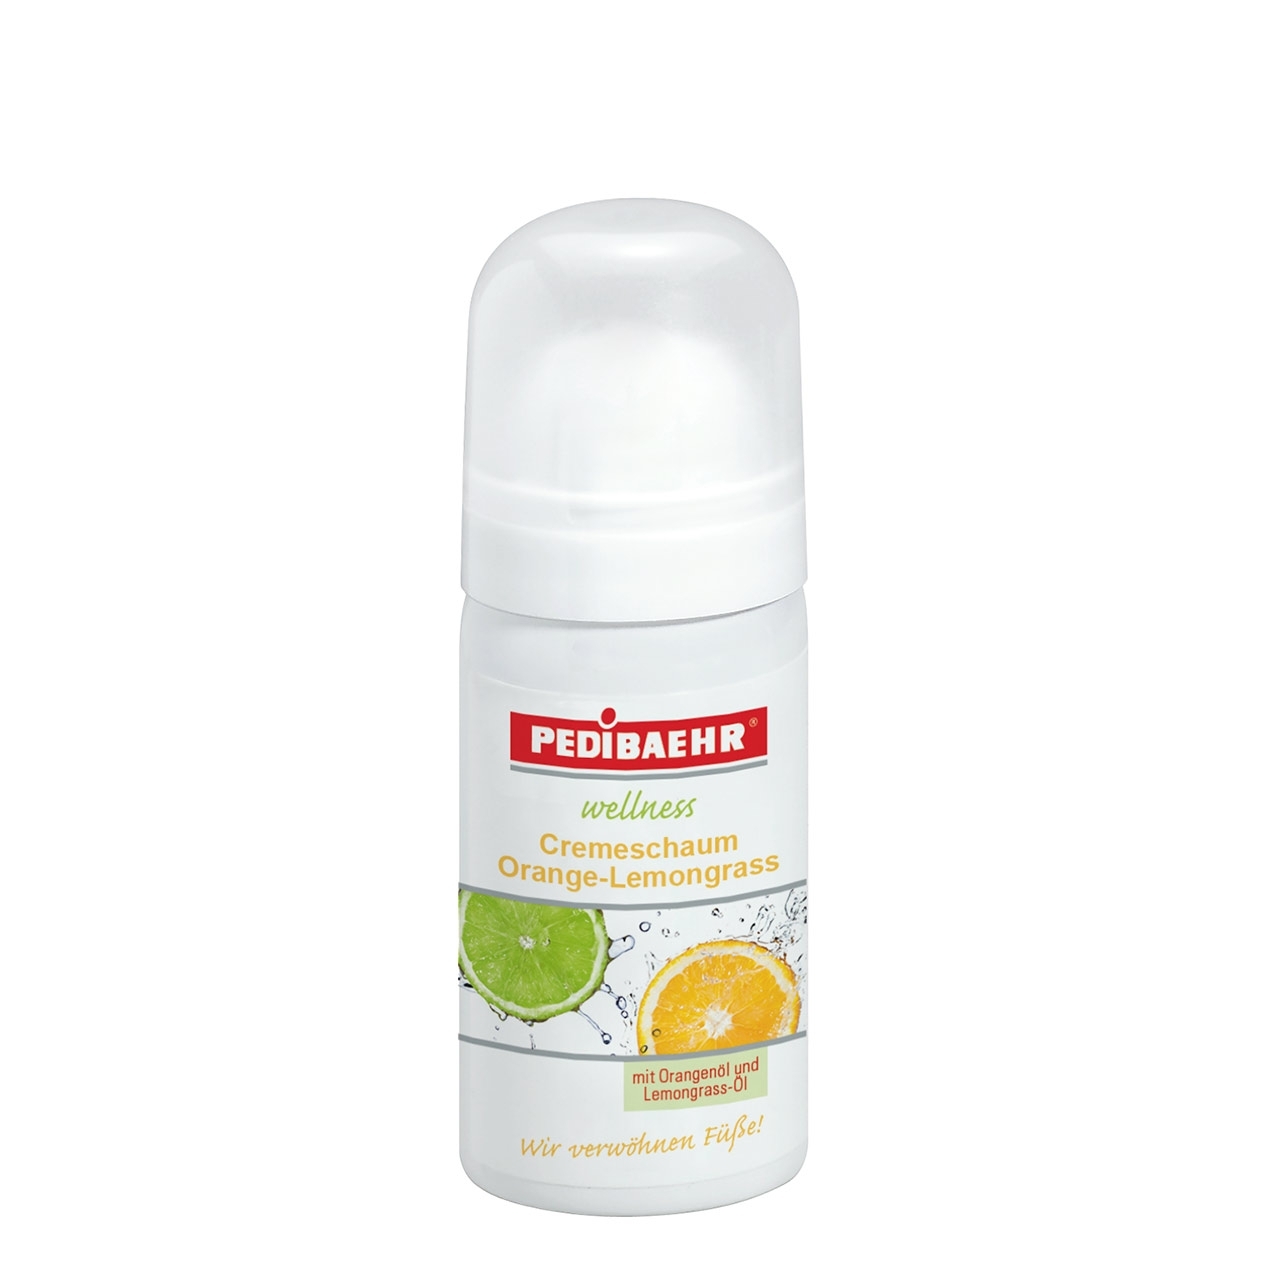 PEDIBAEHR Cremeschaum Orange-Lemongrass 35 ml